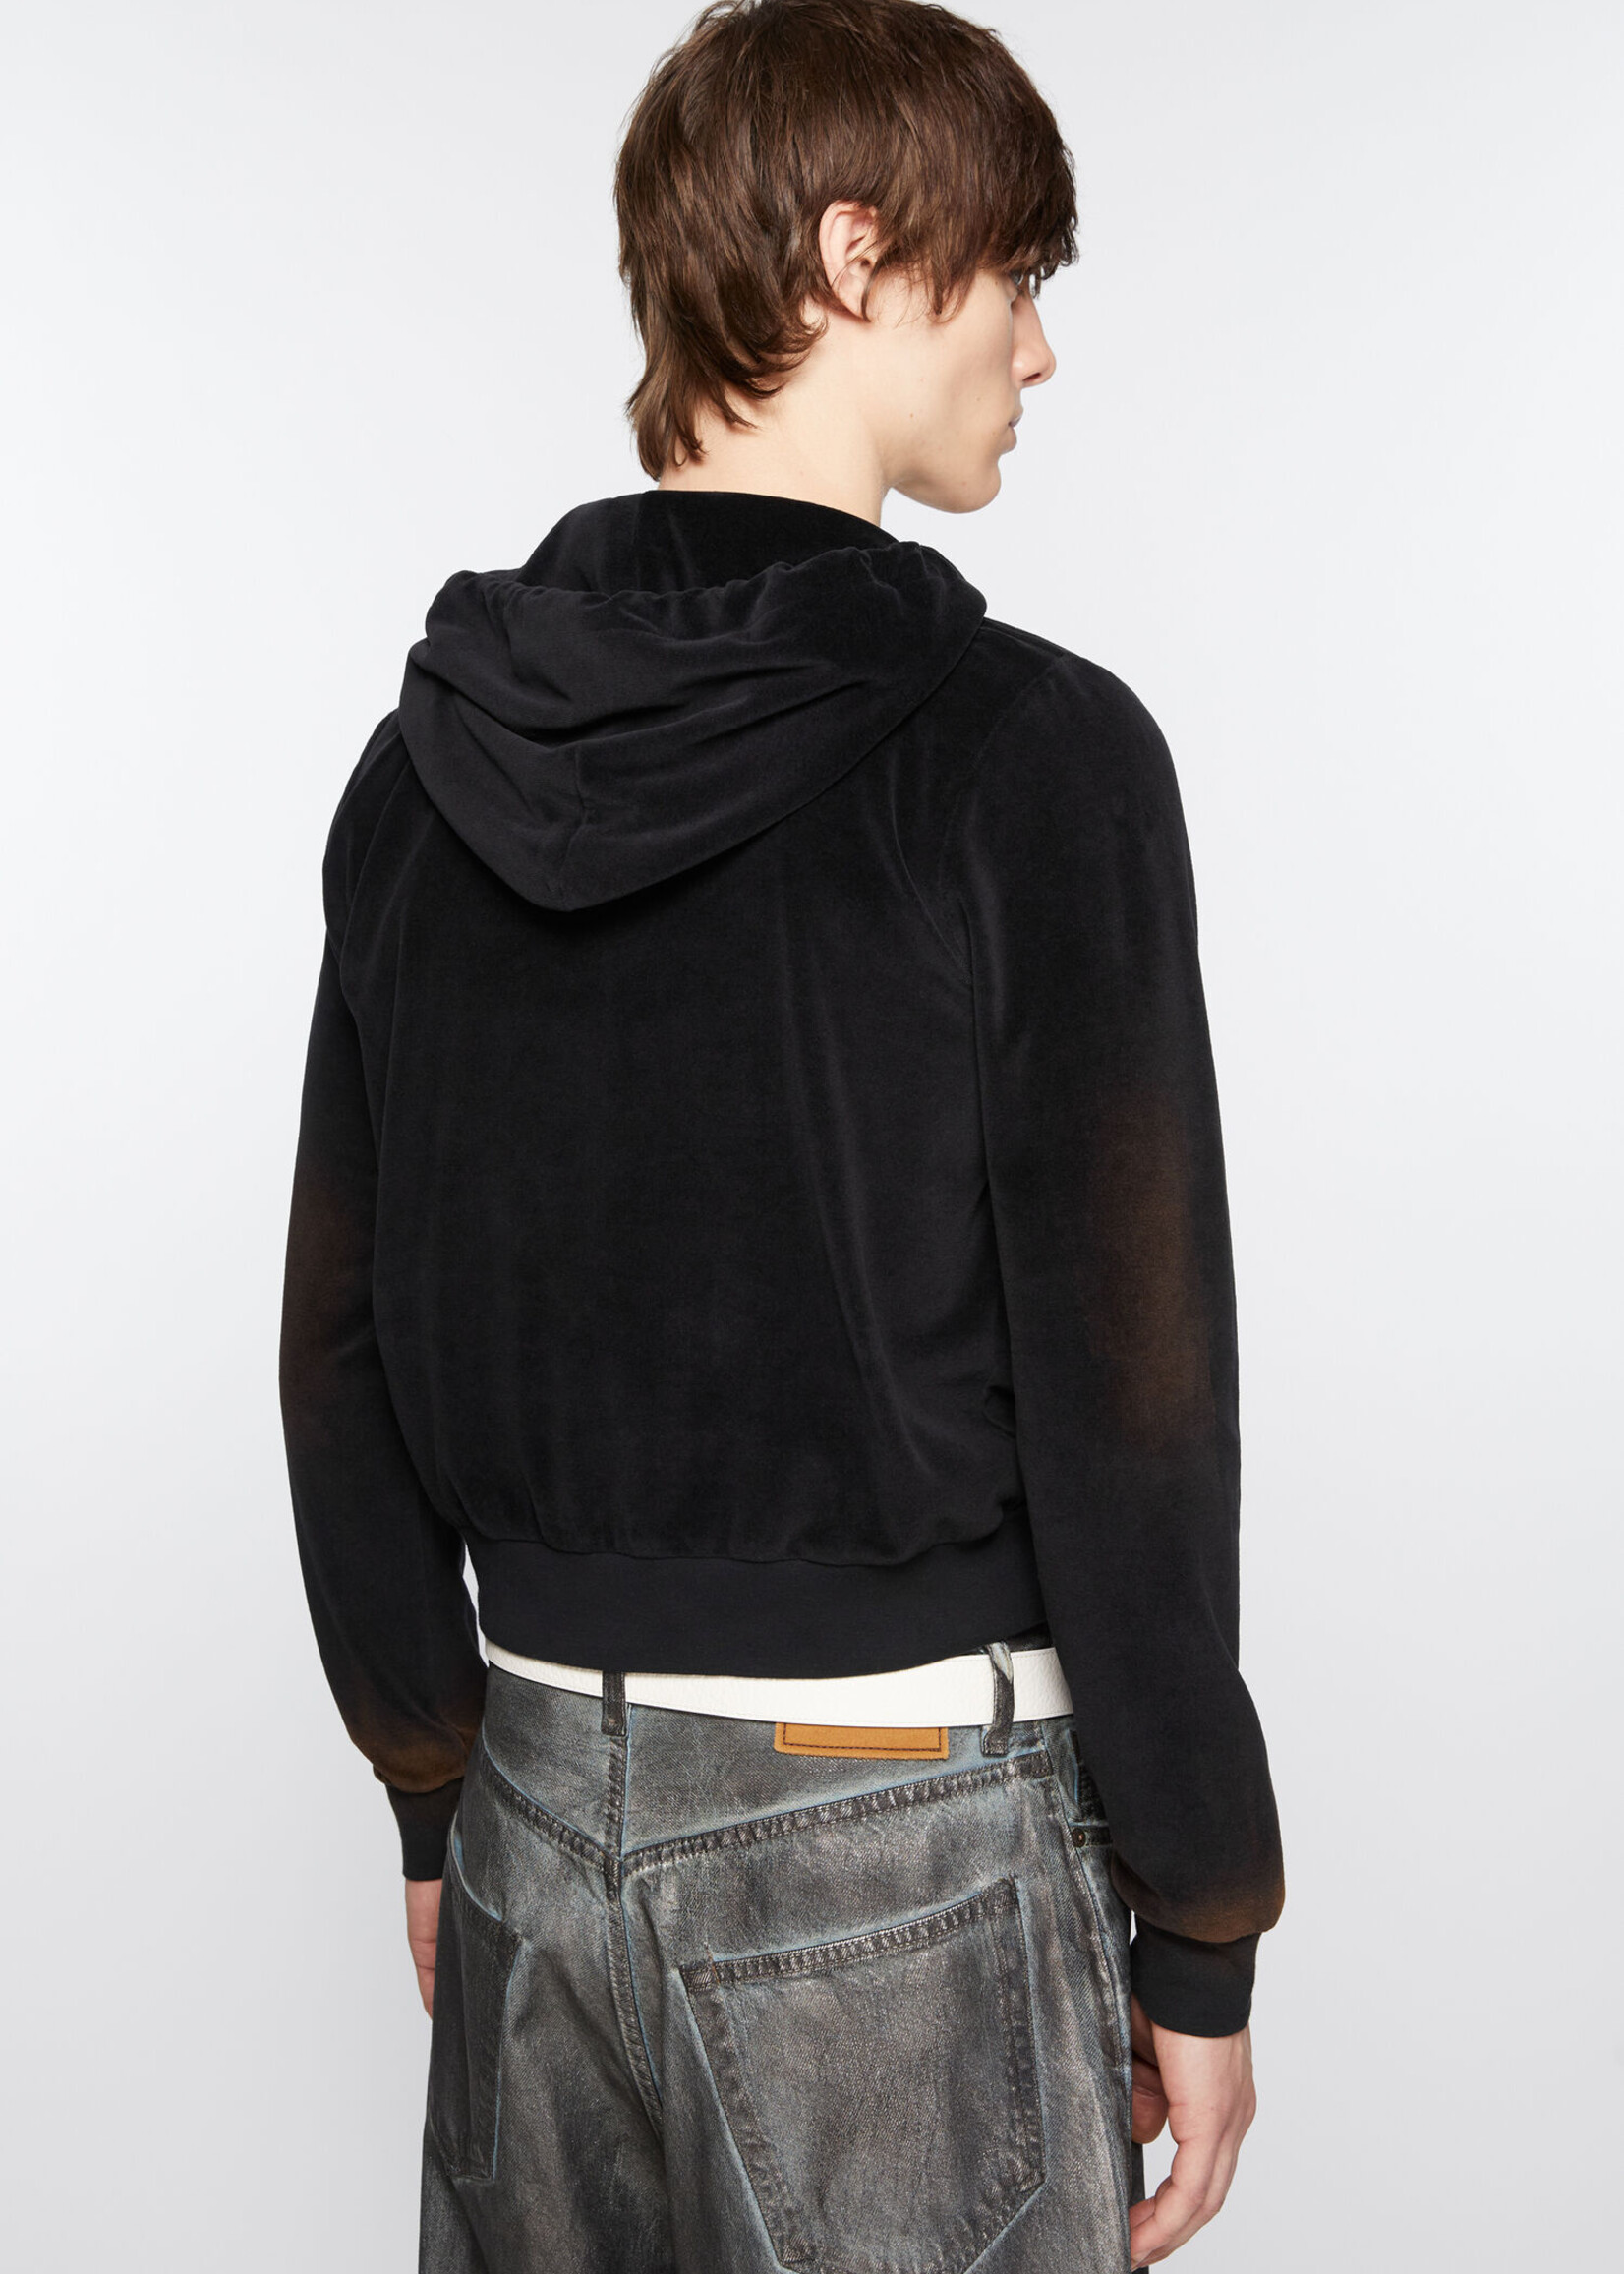 Acne Studios Hooded sweater - Worn black